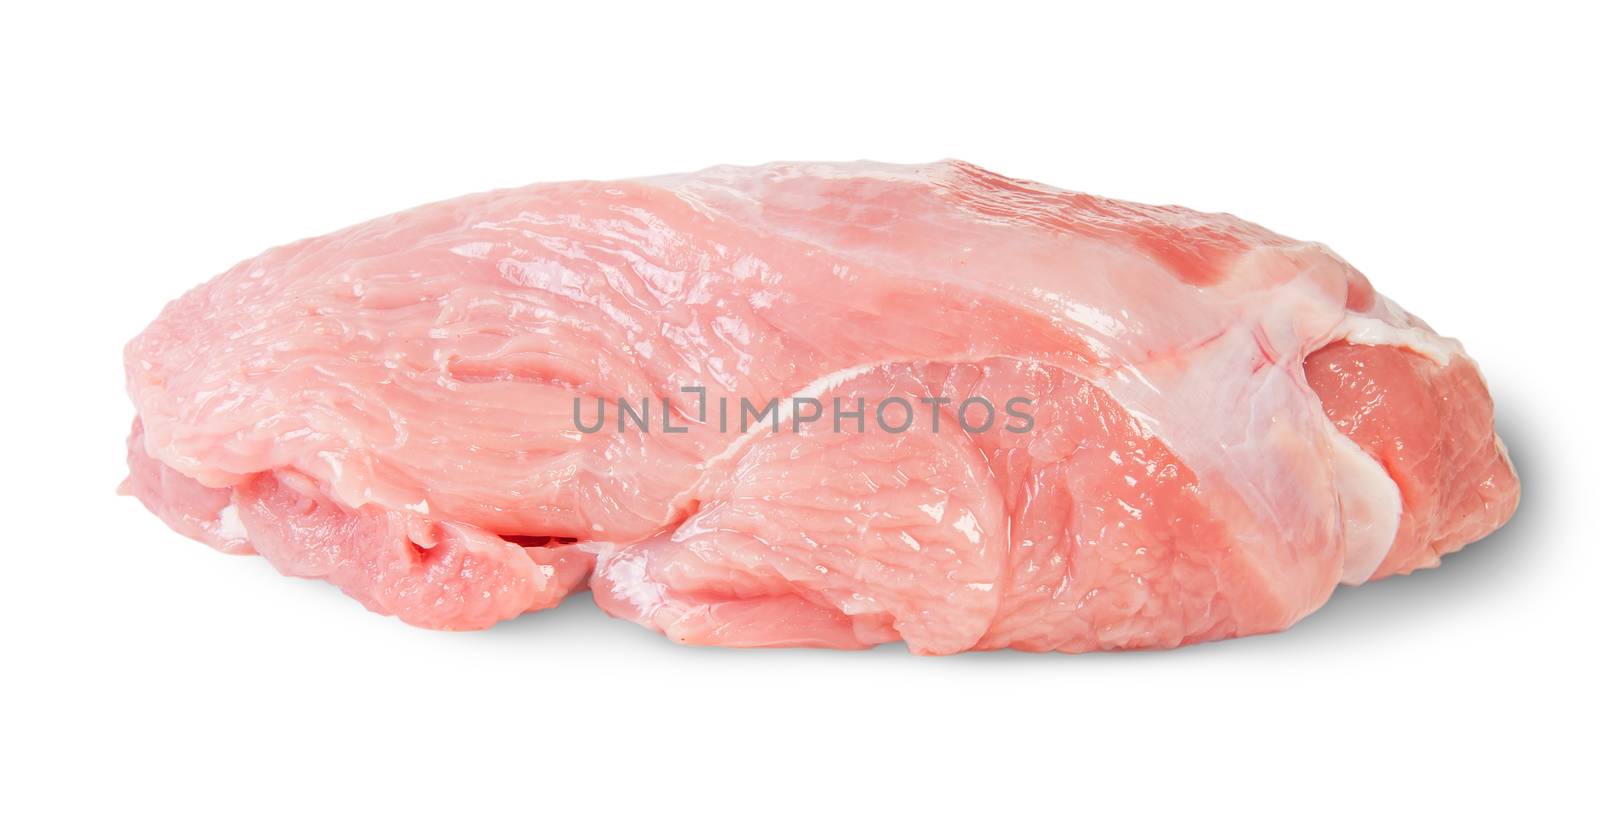 Raw Turkey Meat by Cipariss